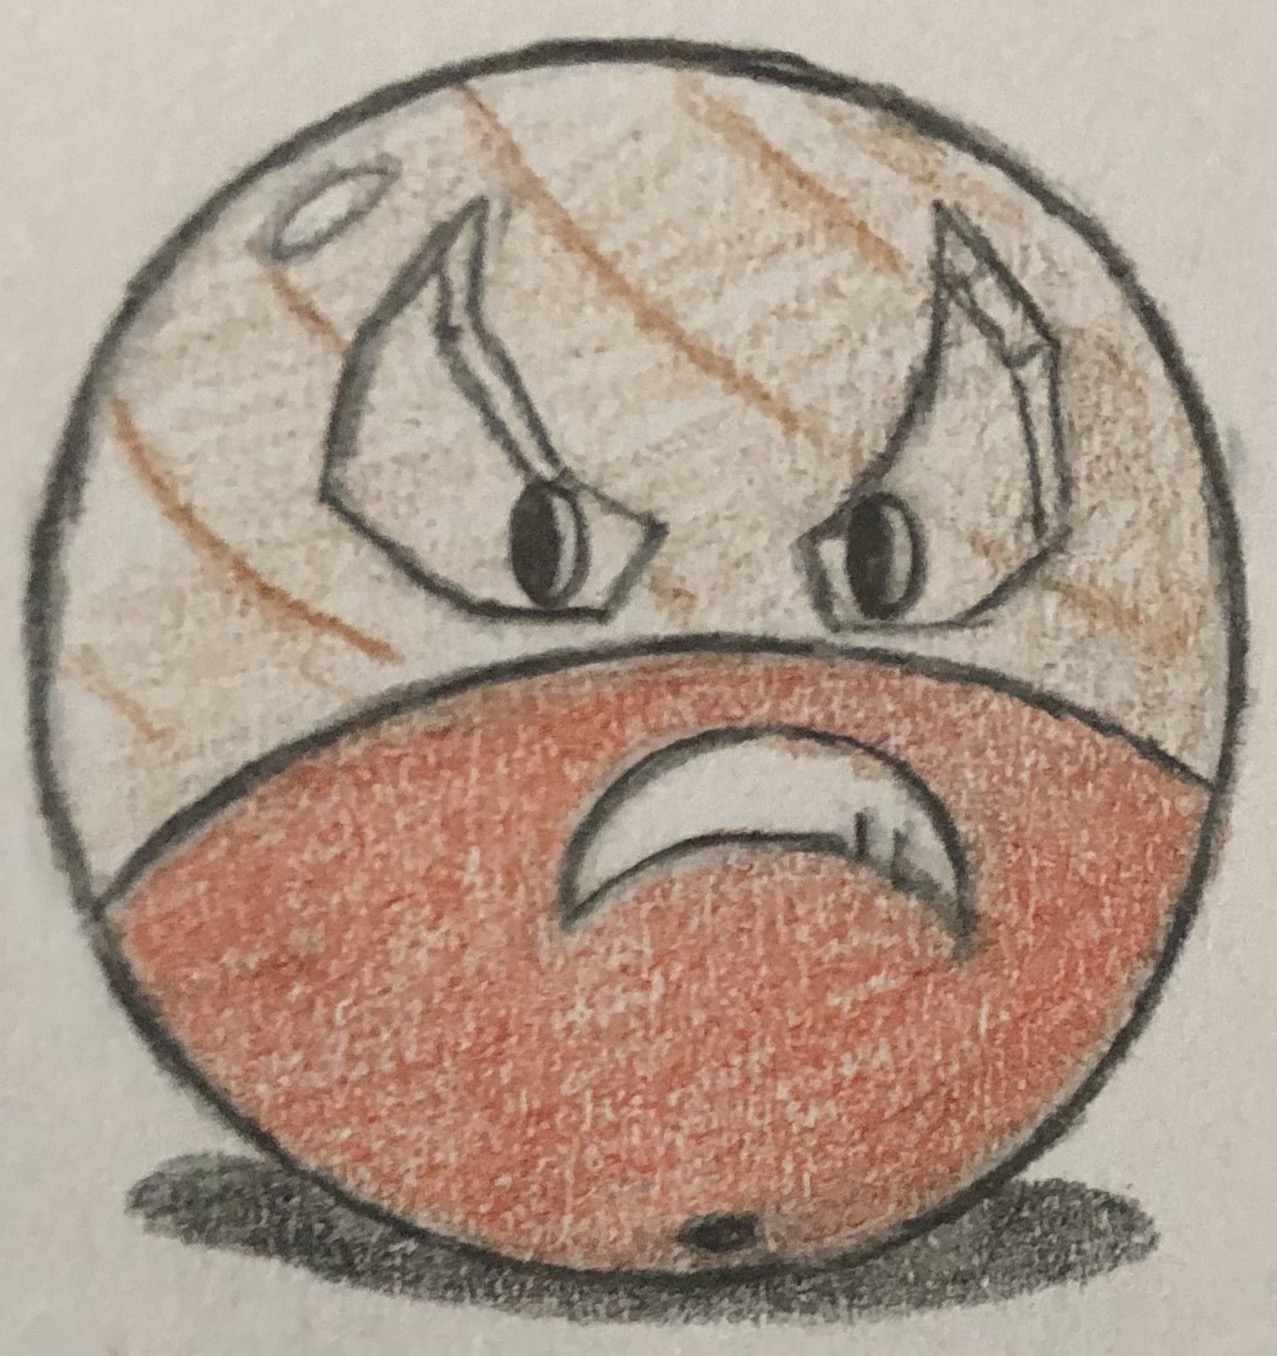 hisuian voltorb (pokemon) drawn by glassy0302